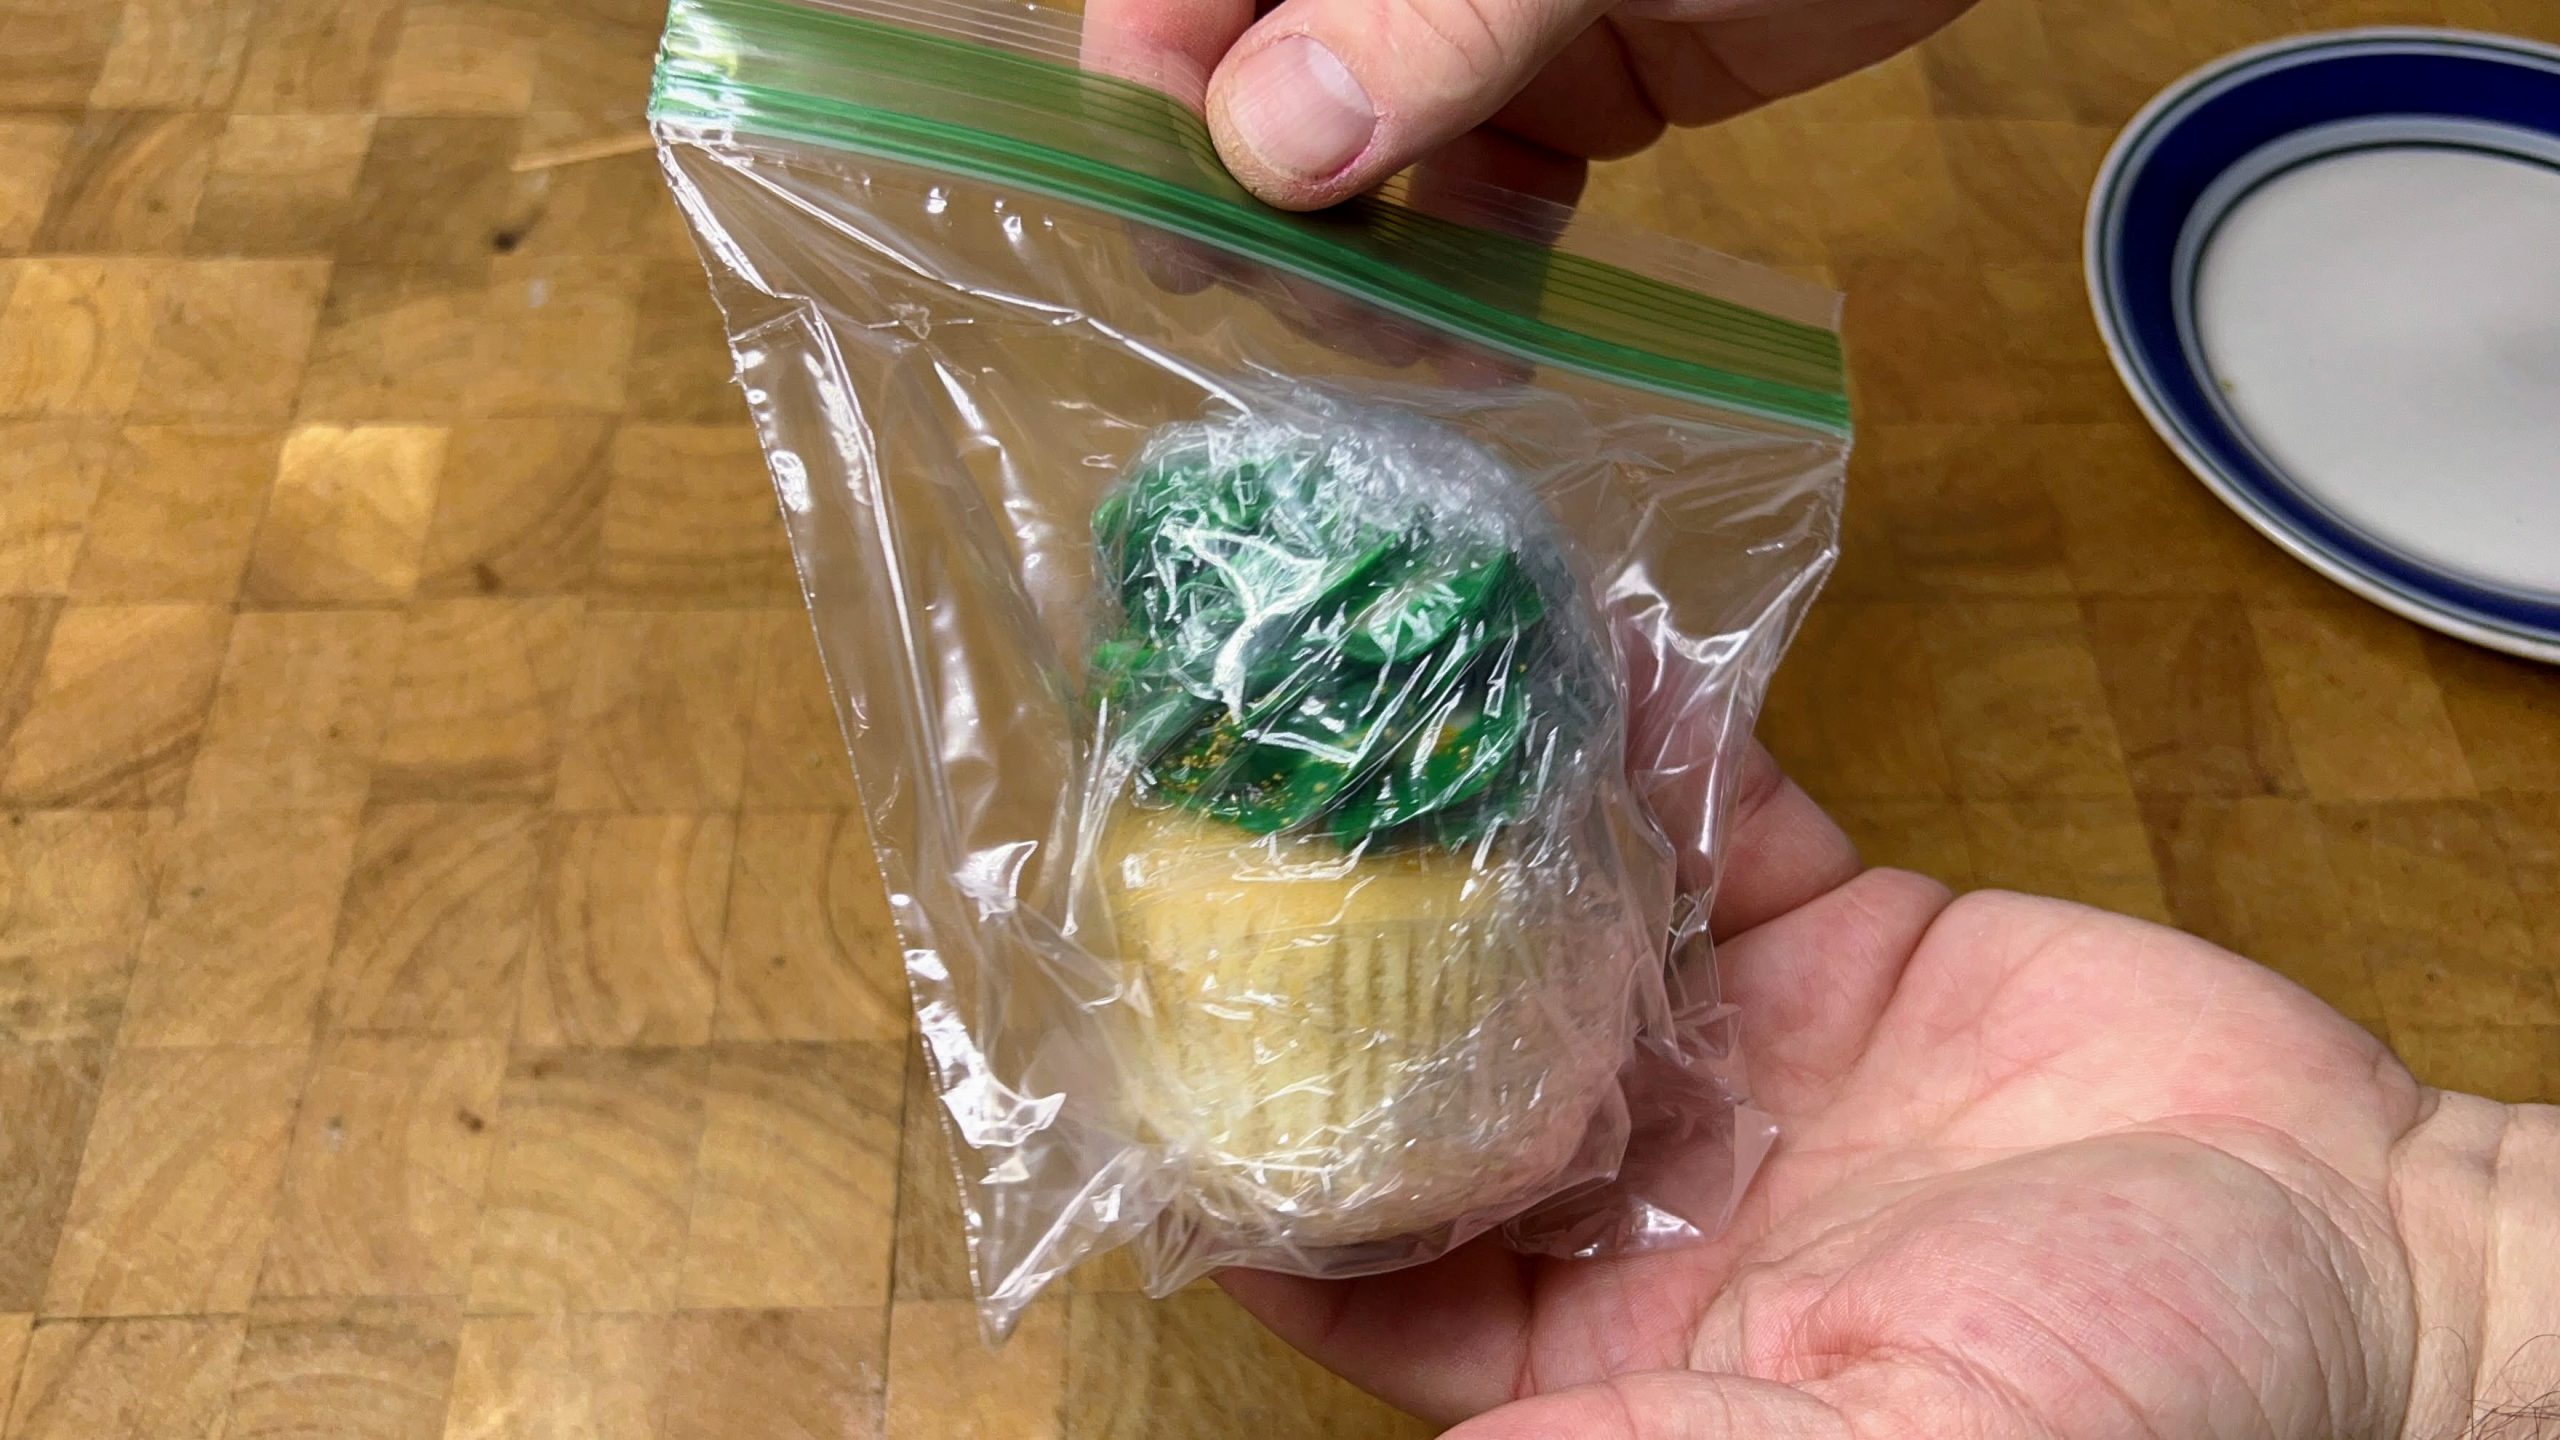 zipping a freezer bag shut with wrapped cupcake inside